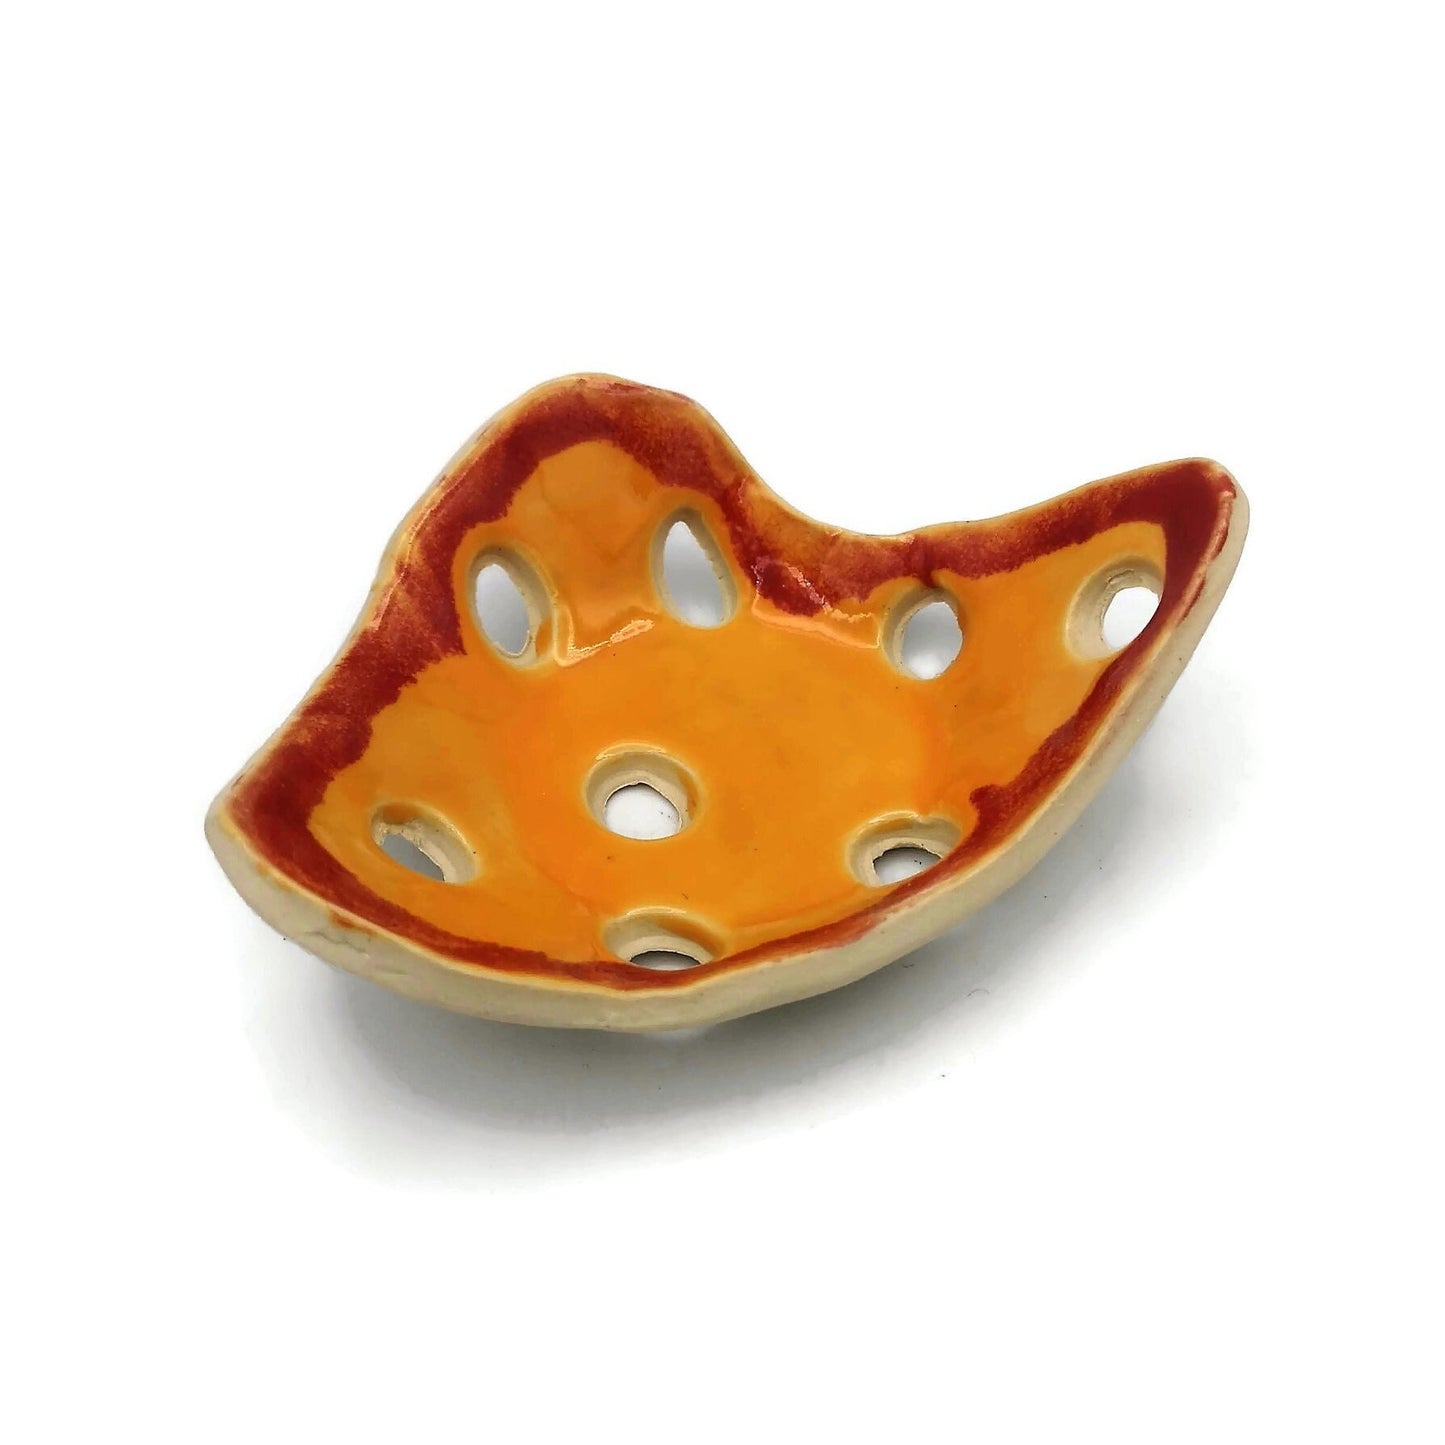 Small Handmade Ceramic Bowl With Holes, Yellow Pottery Decorative Clay Trinket Dish, Mom Birthday Gift From Daughter, Jewelry Organizer - Ceramica Ana Rafael